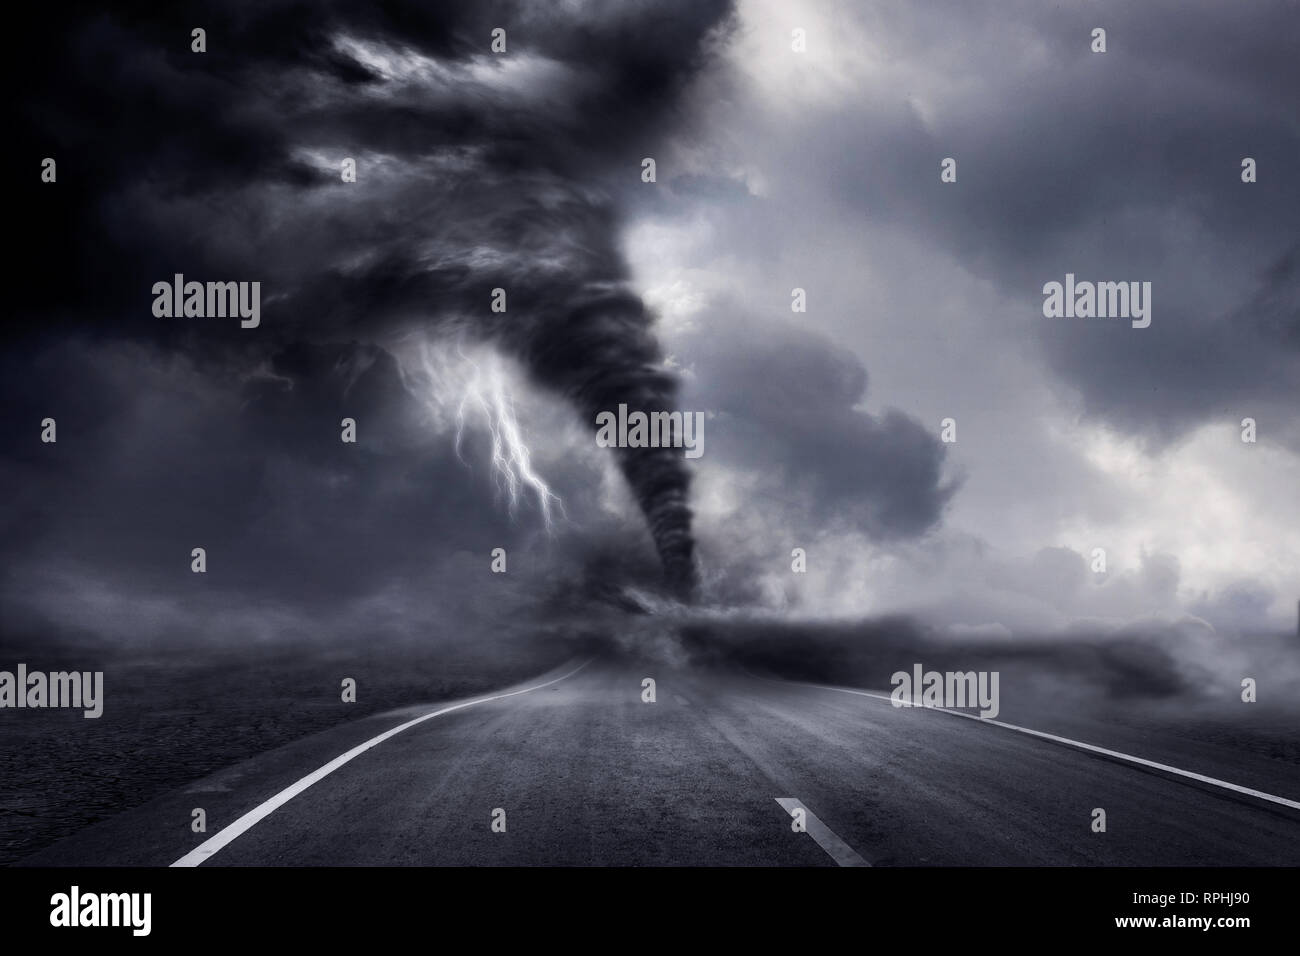 A large storm producing a Tornado, causing destruction. 3D Illustration. Stock Photo